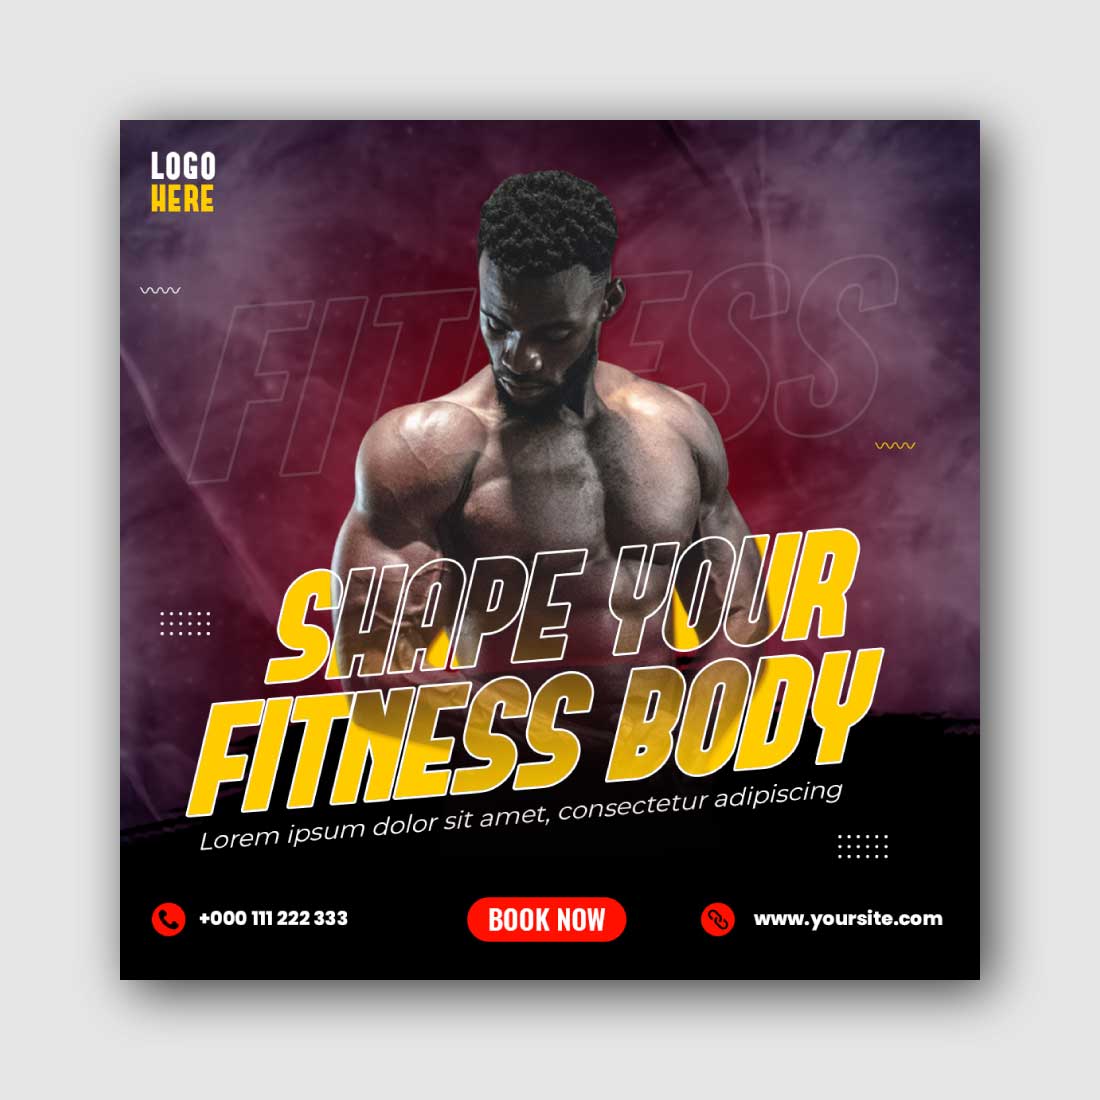 Fitness Body Social Media Instagram Post Template cover image.